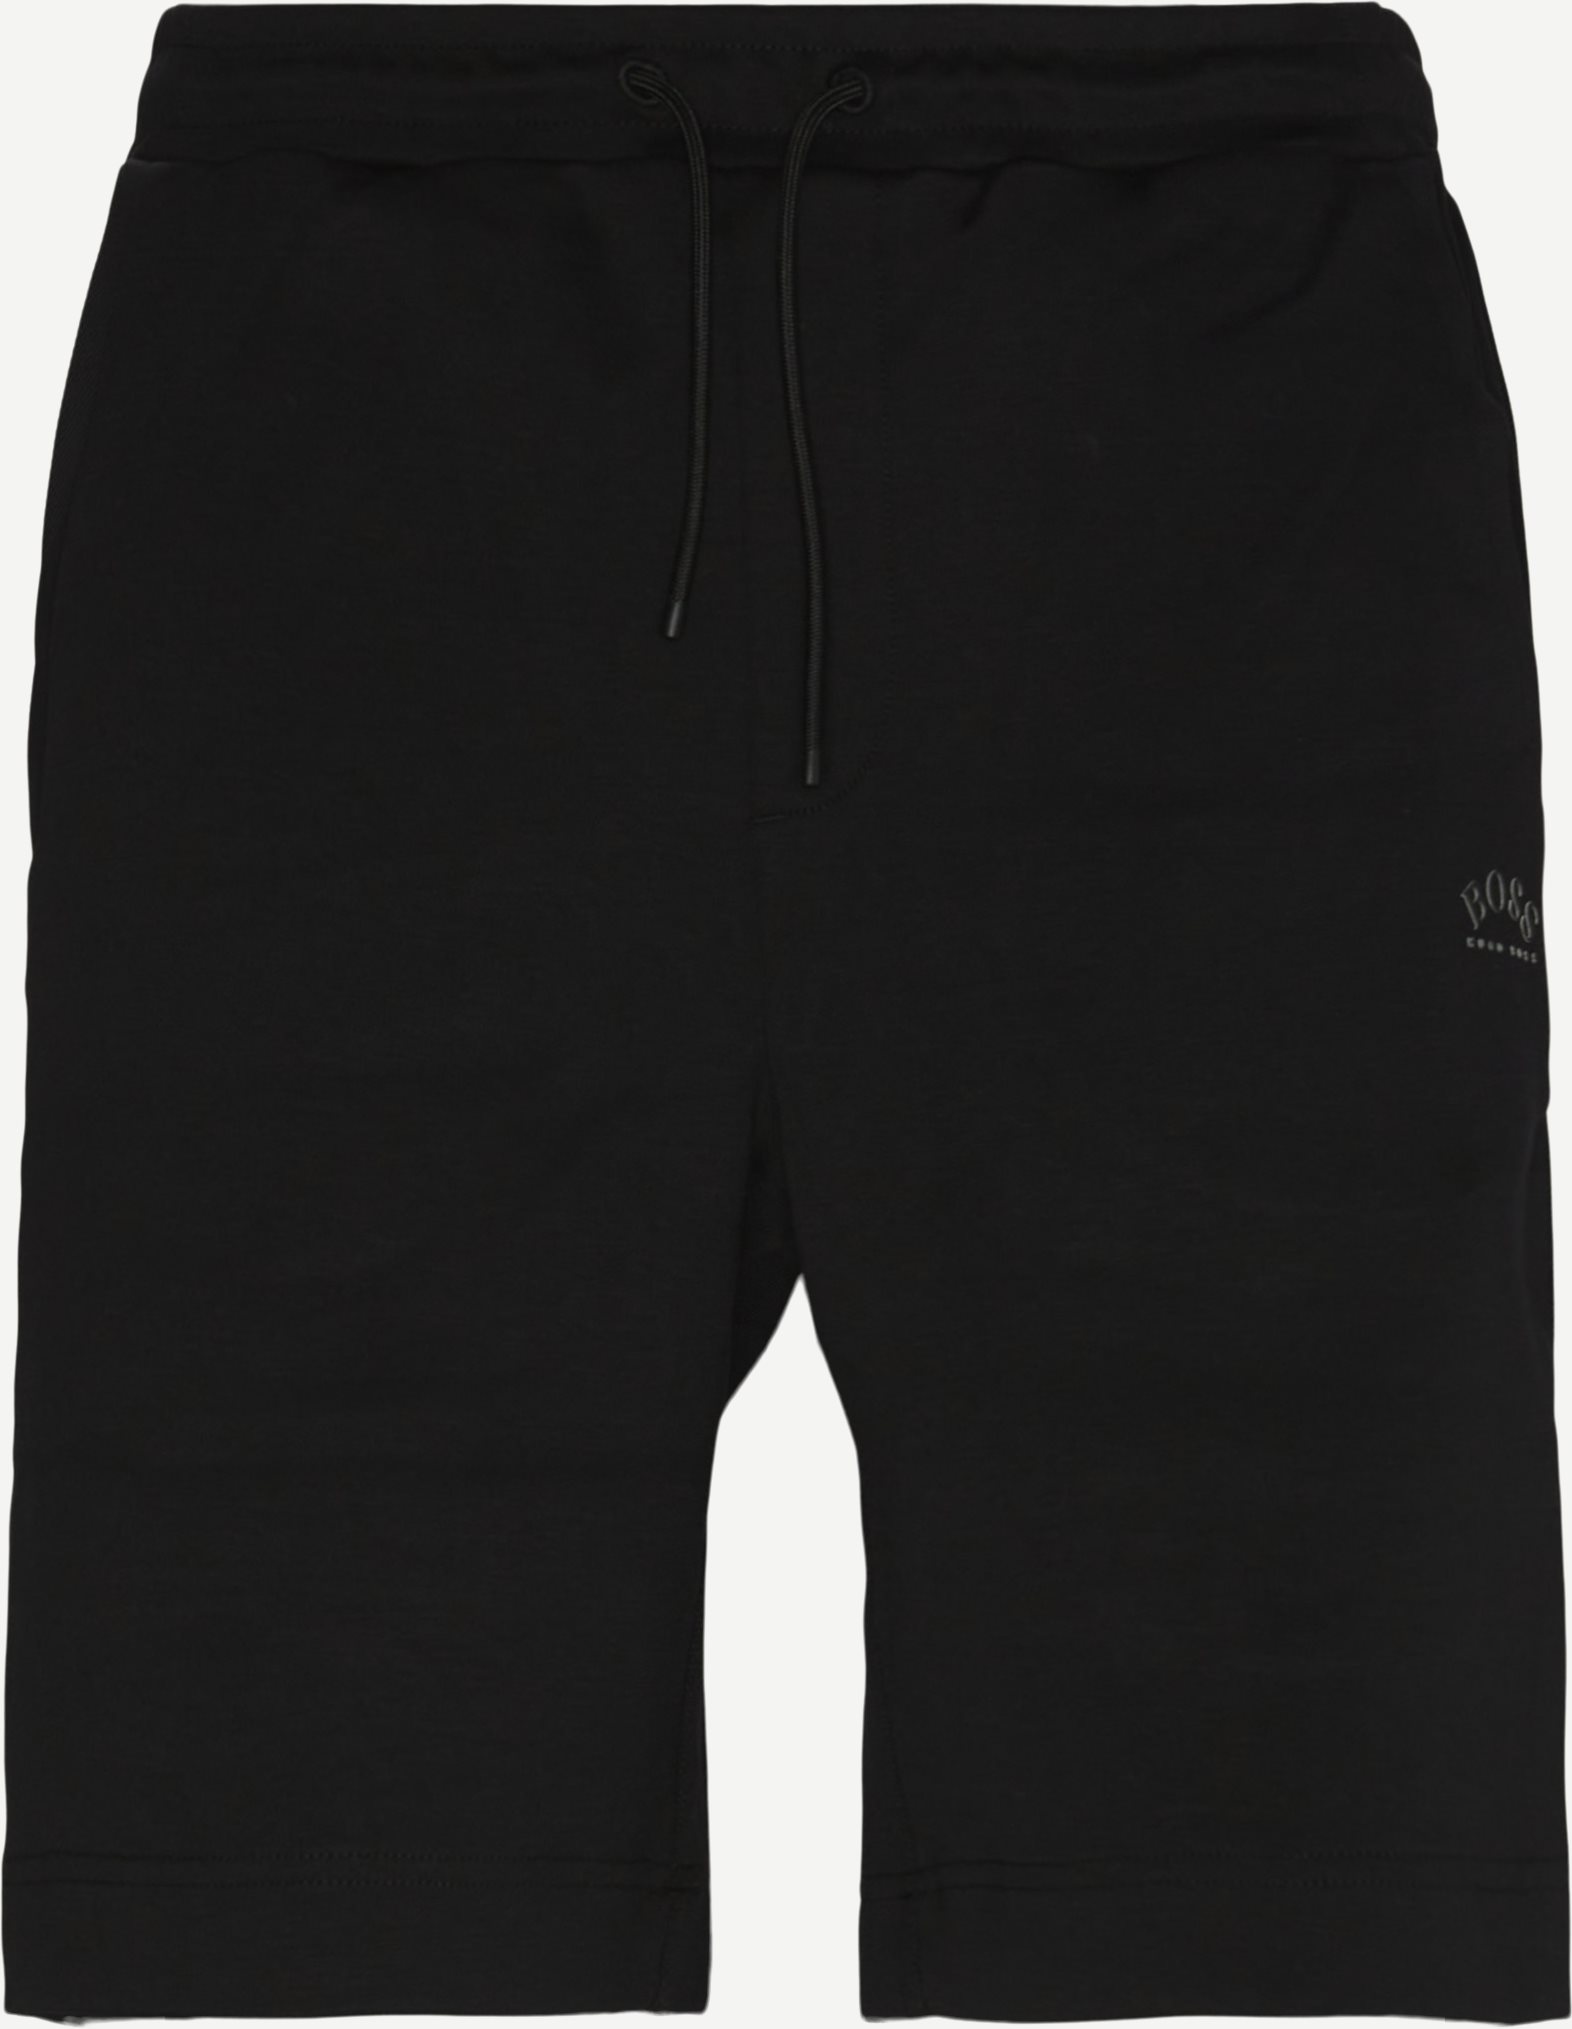 Headlo 2 Sweatshorts - Shorts - Regular fit - Svart